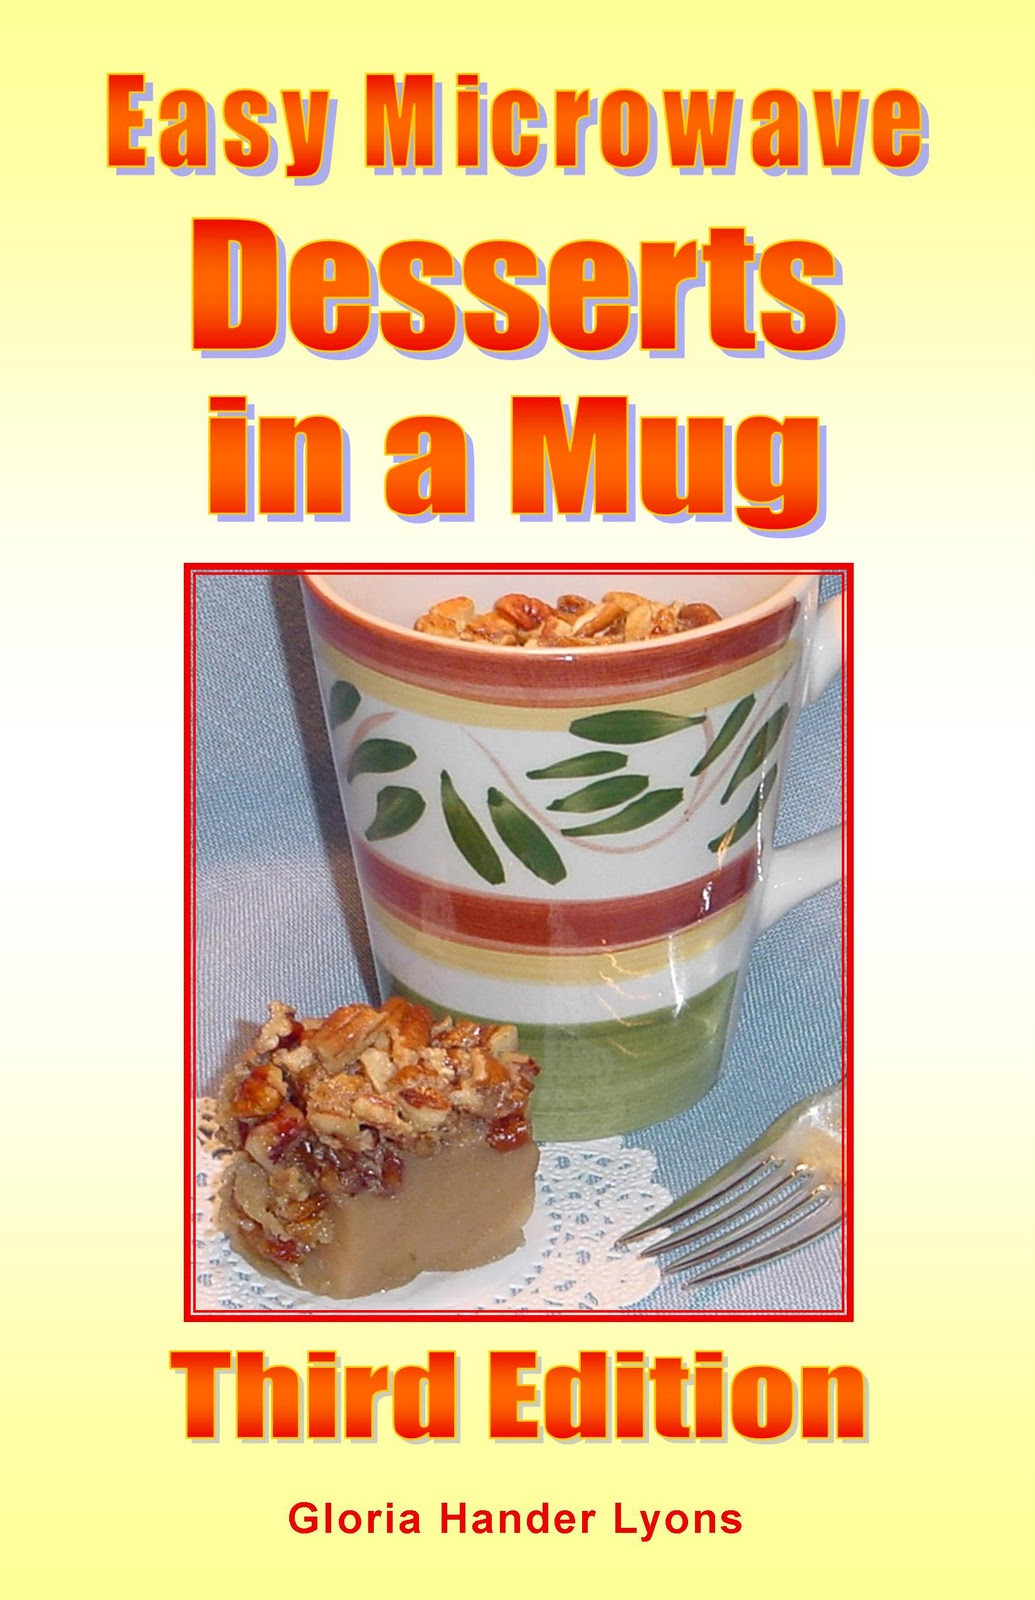 Microwave Dessert Recipes
 Easy Microwave Desserts in a Mug